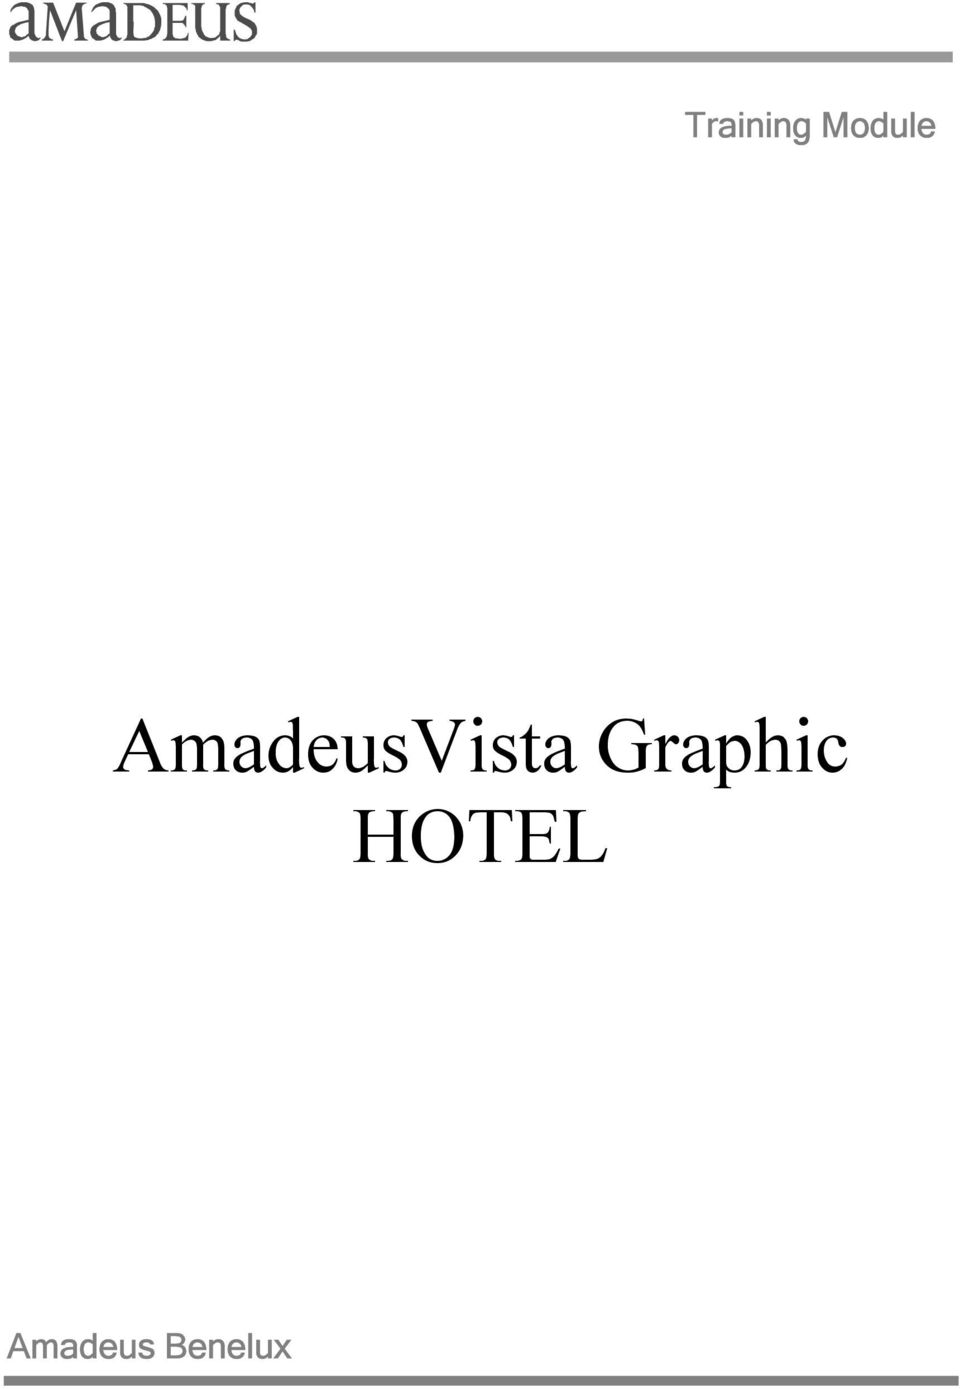 AmadeusVista